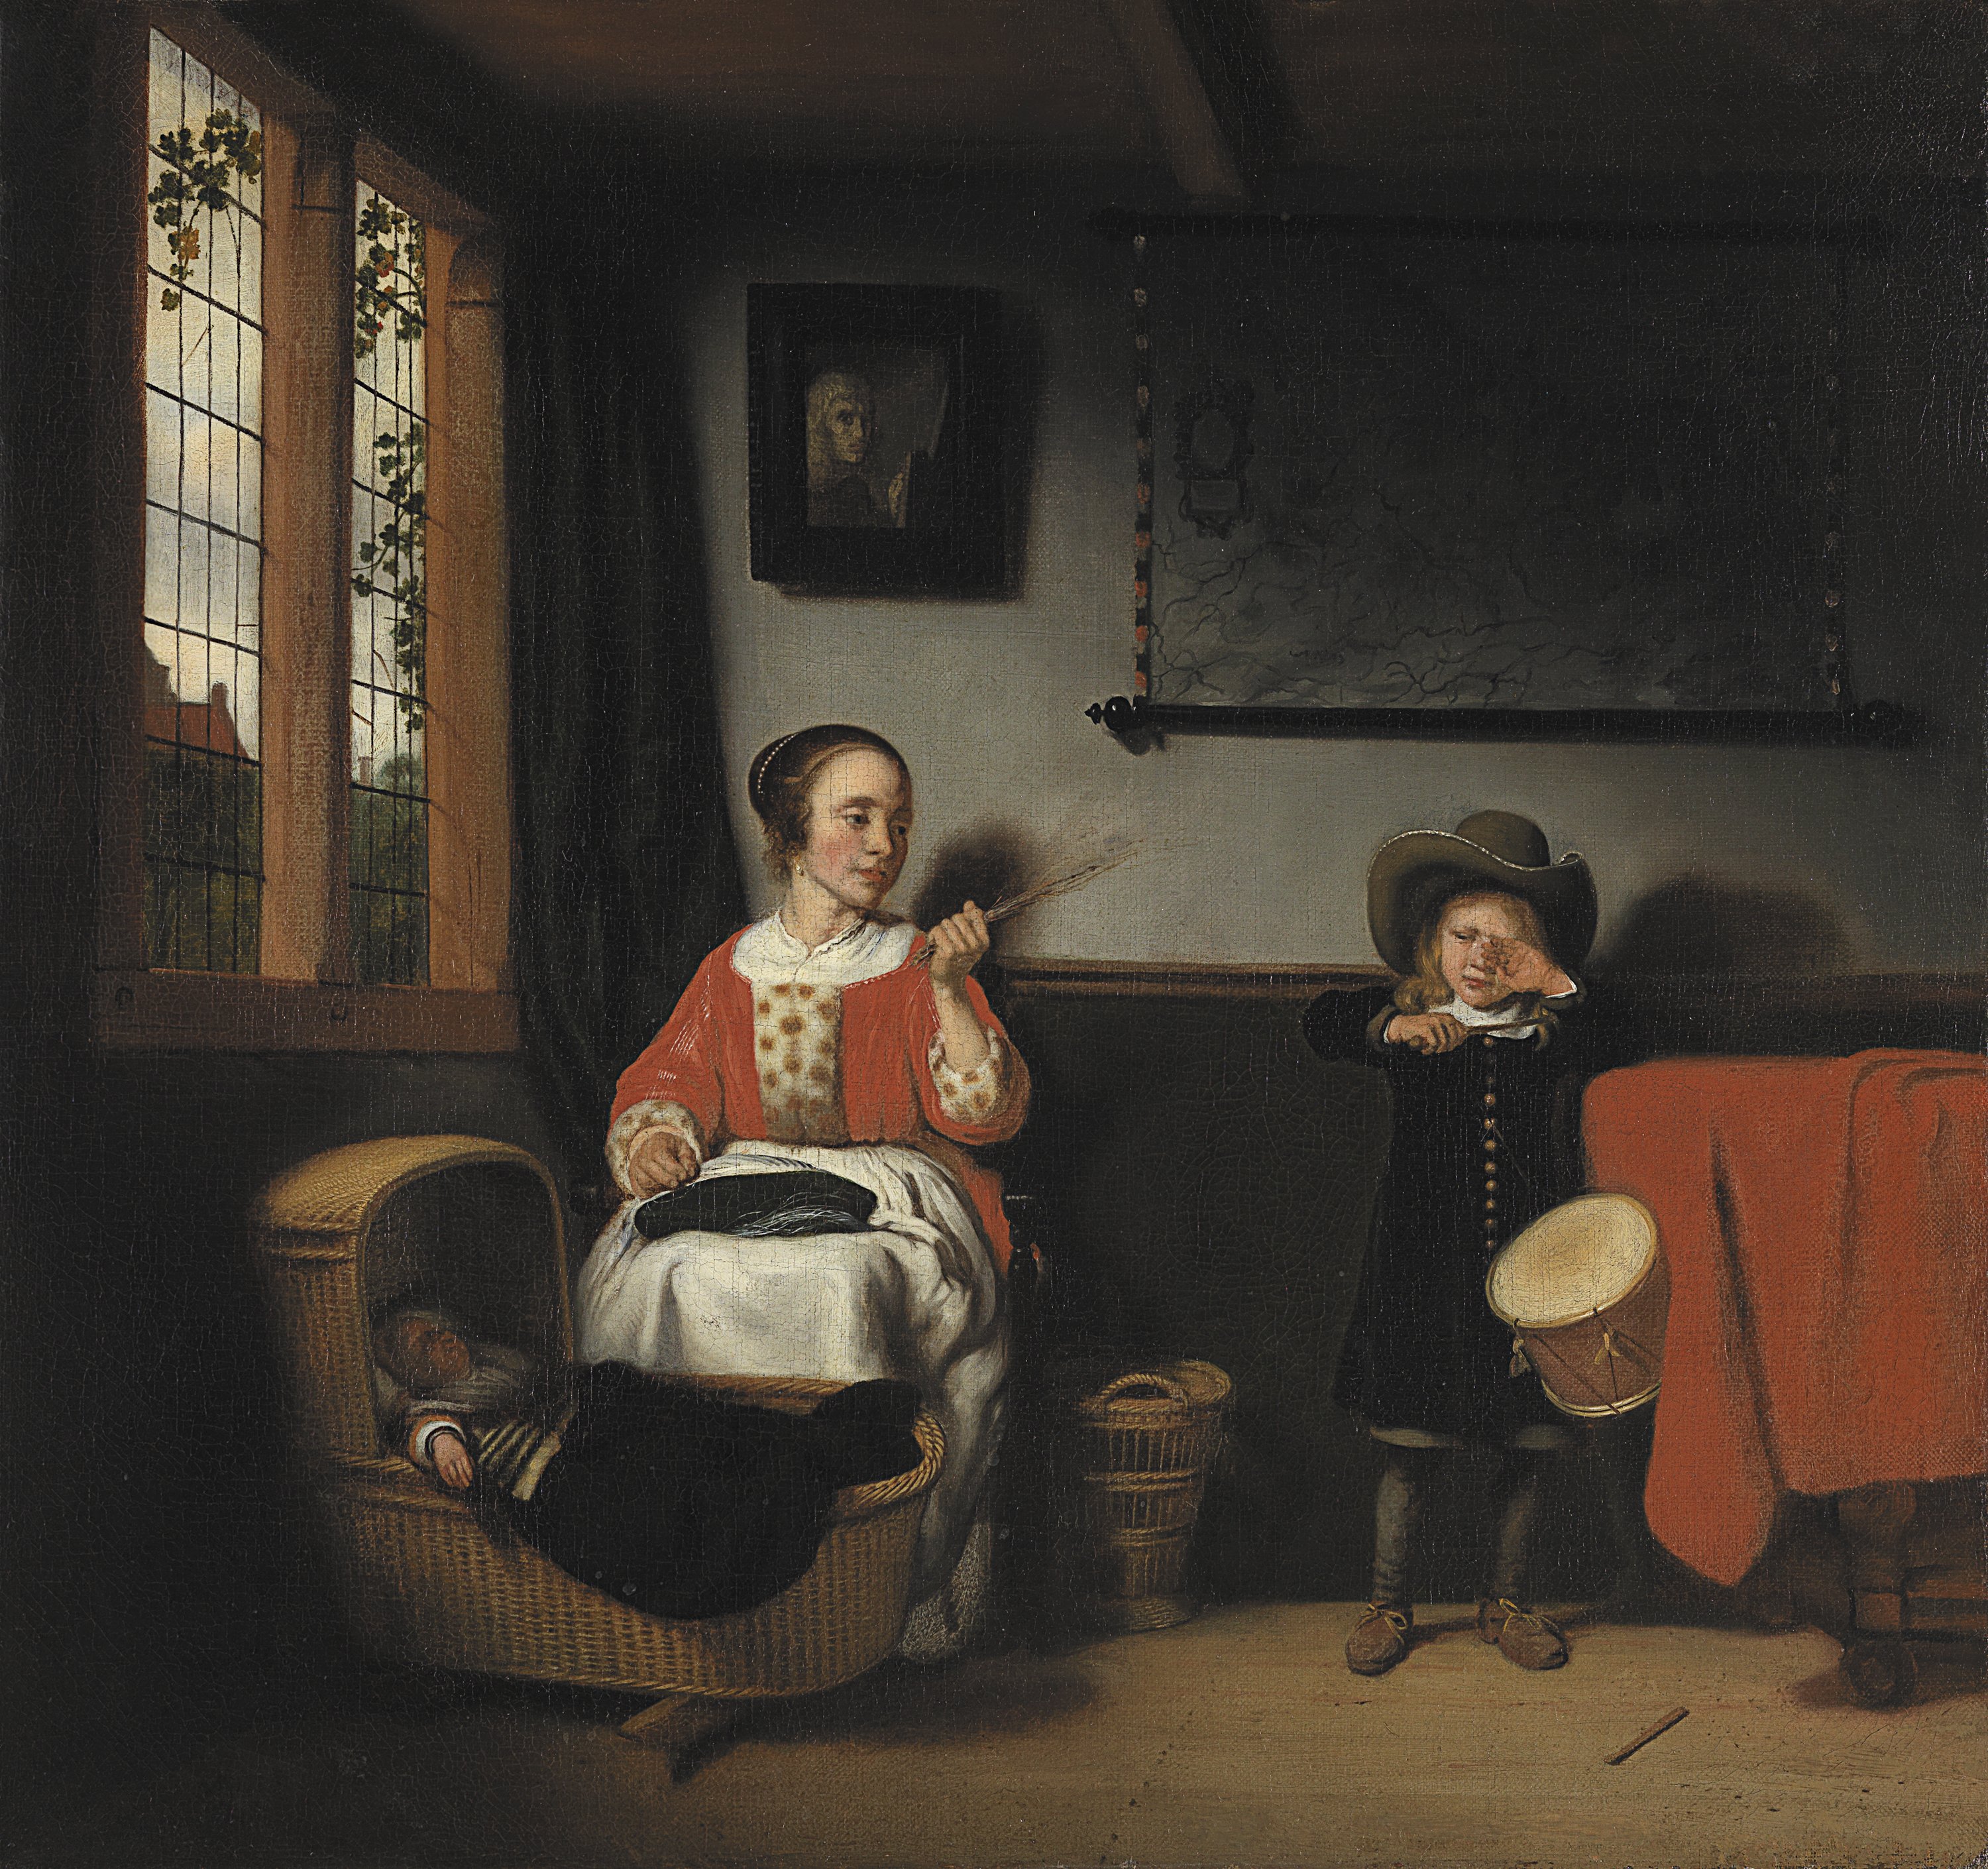 El tamborilero desobediente. Nicolaes Maes